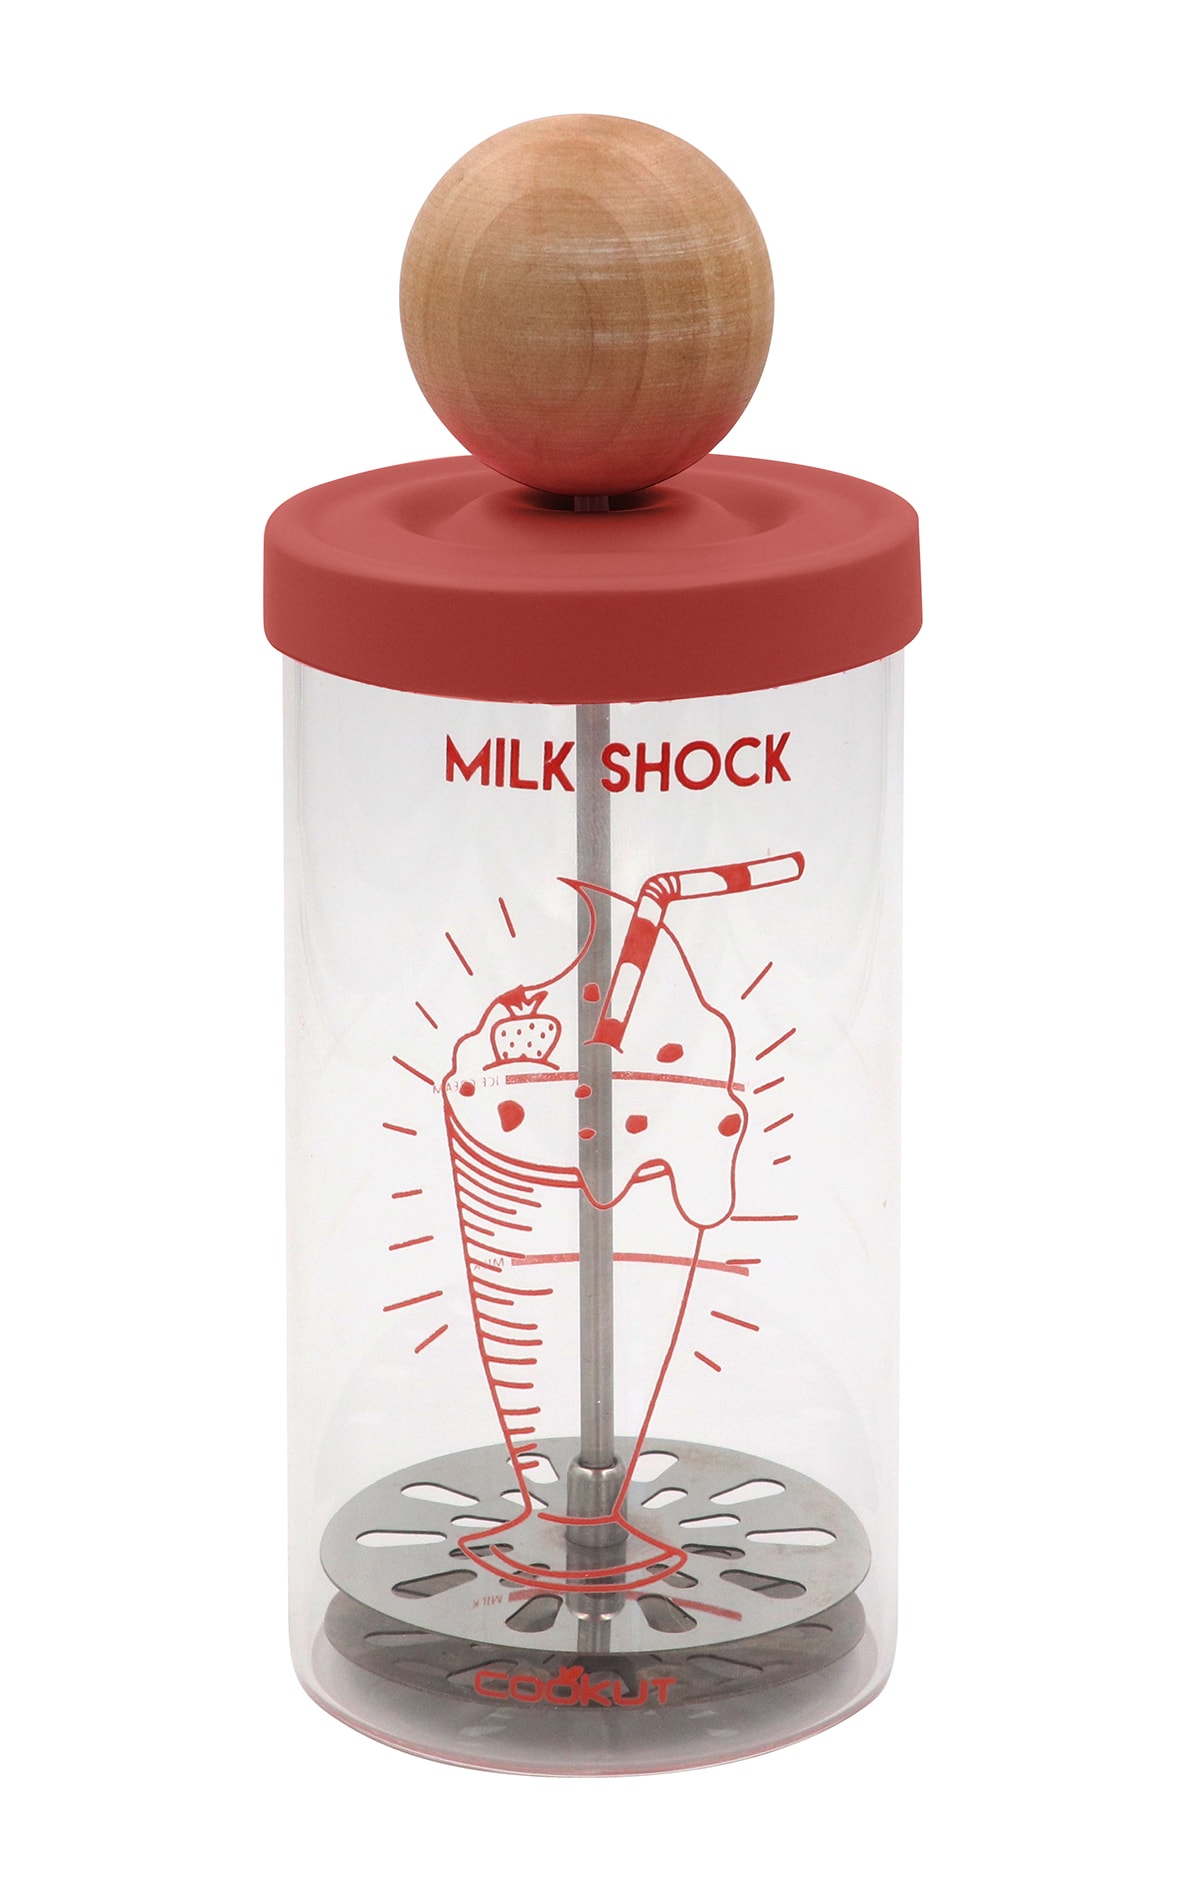 Cookut Milkshock Milkshake Shaker with 2 Glasses and Straws